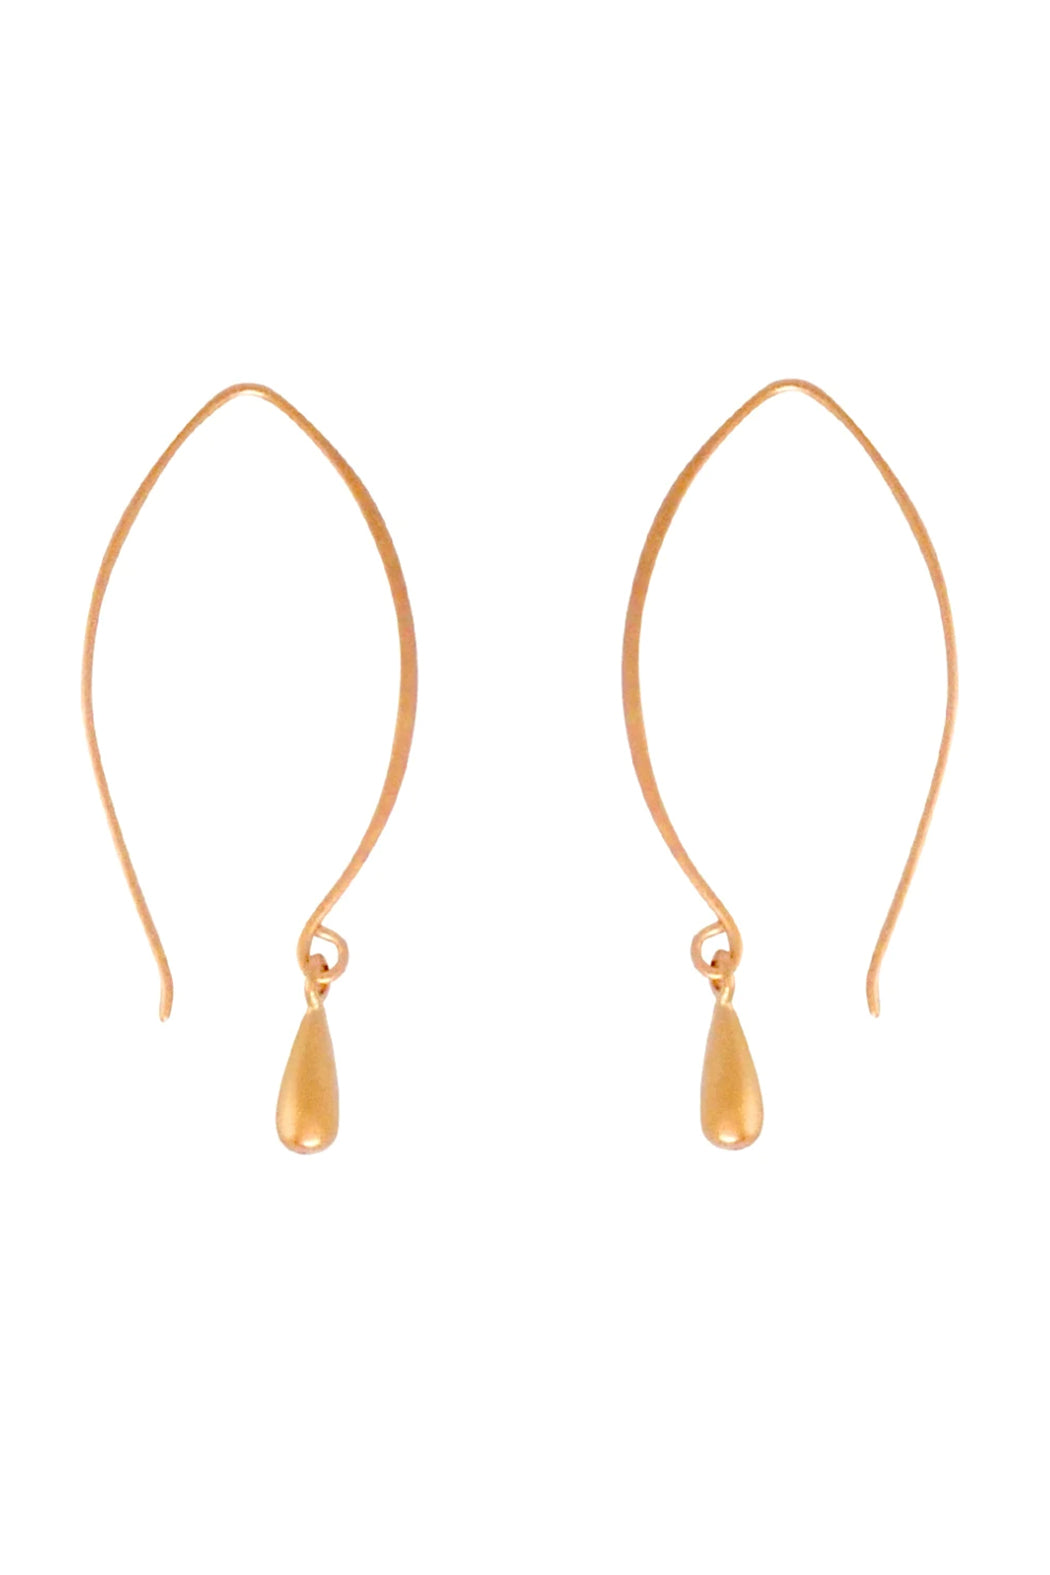 Bronwen Isis Earrings - Long Gold